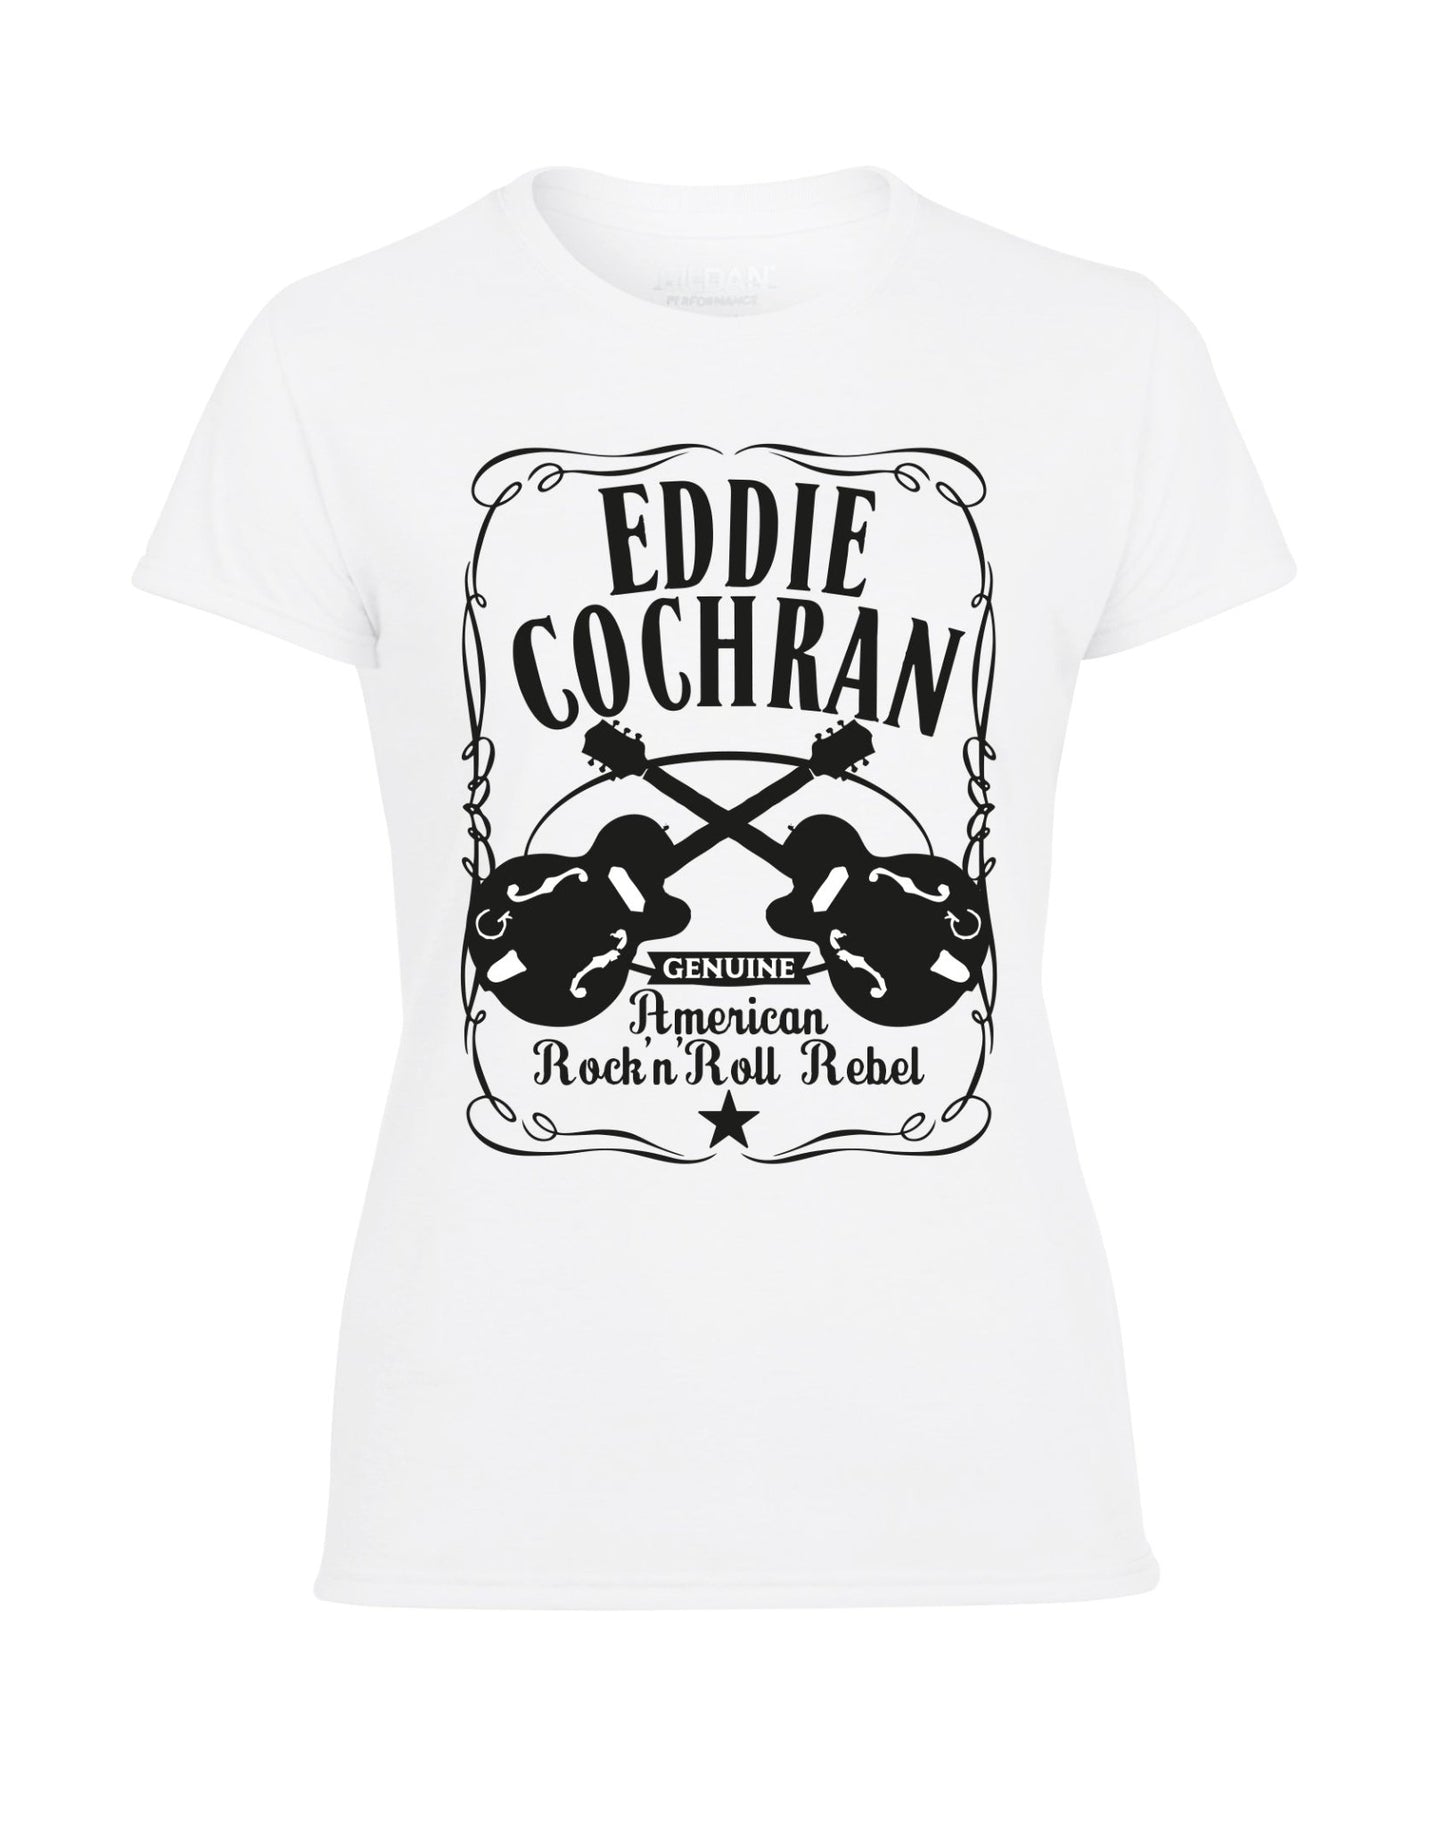 Eddie Cochran - cross Gretsch design - ladies fit t-shirt- various colours - Dirty Stop Outs